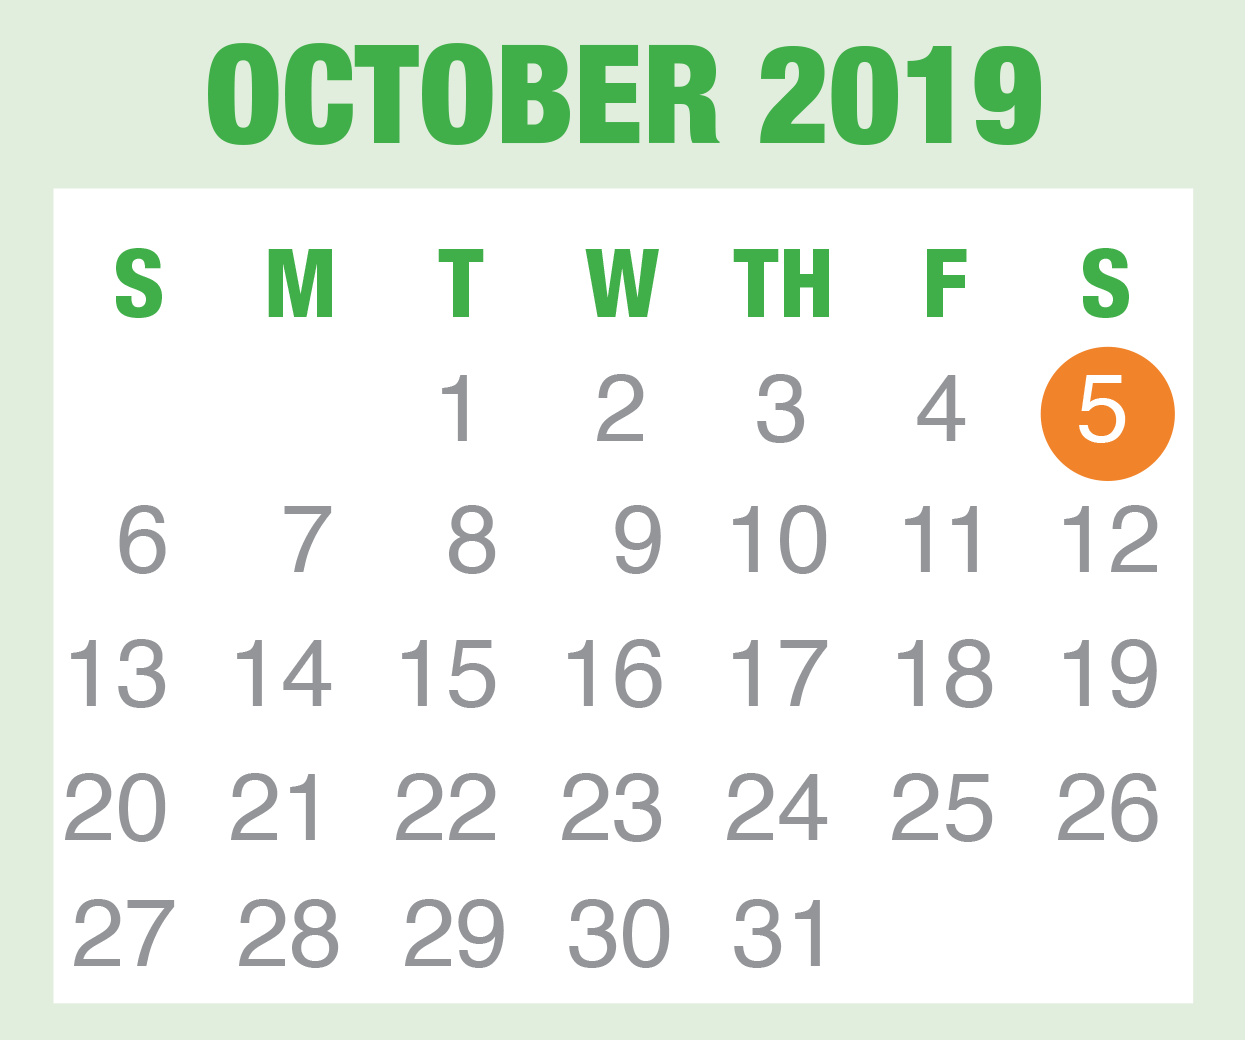 2019-calendar